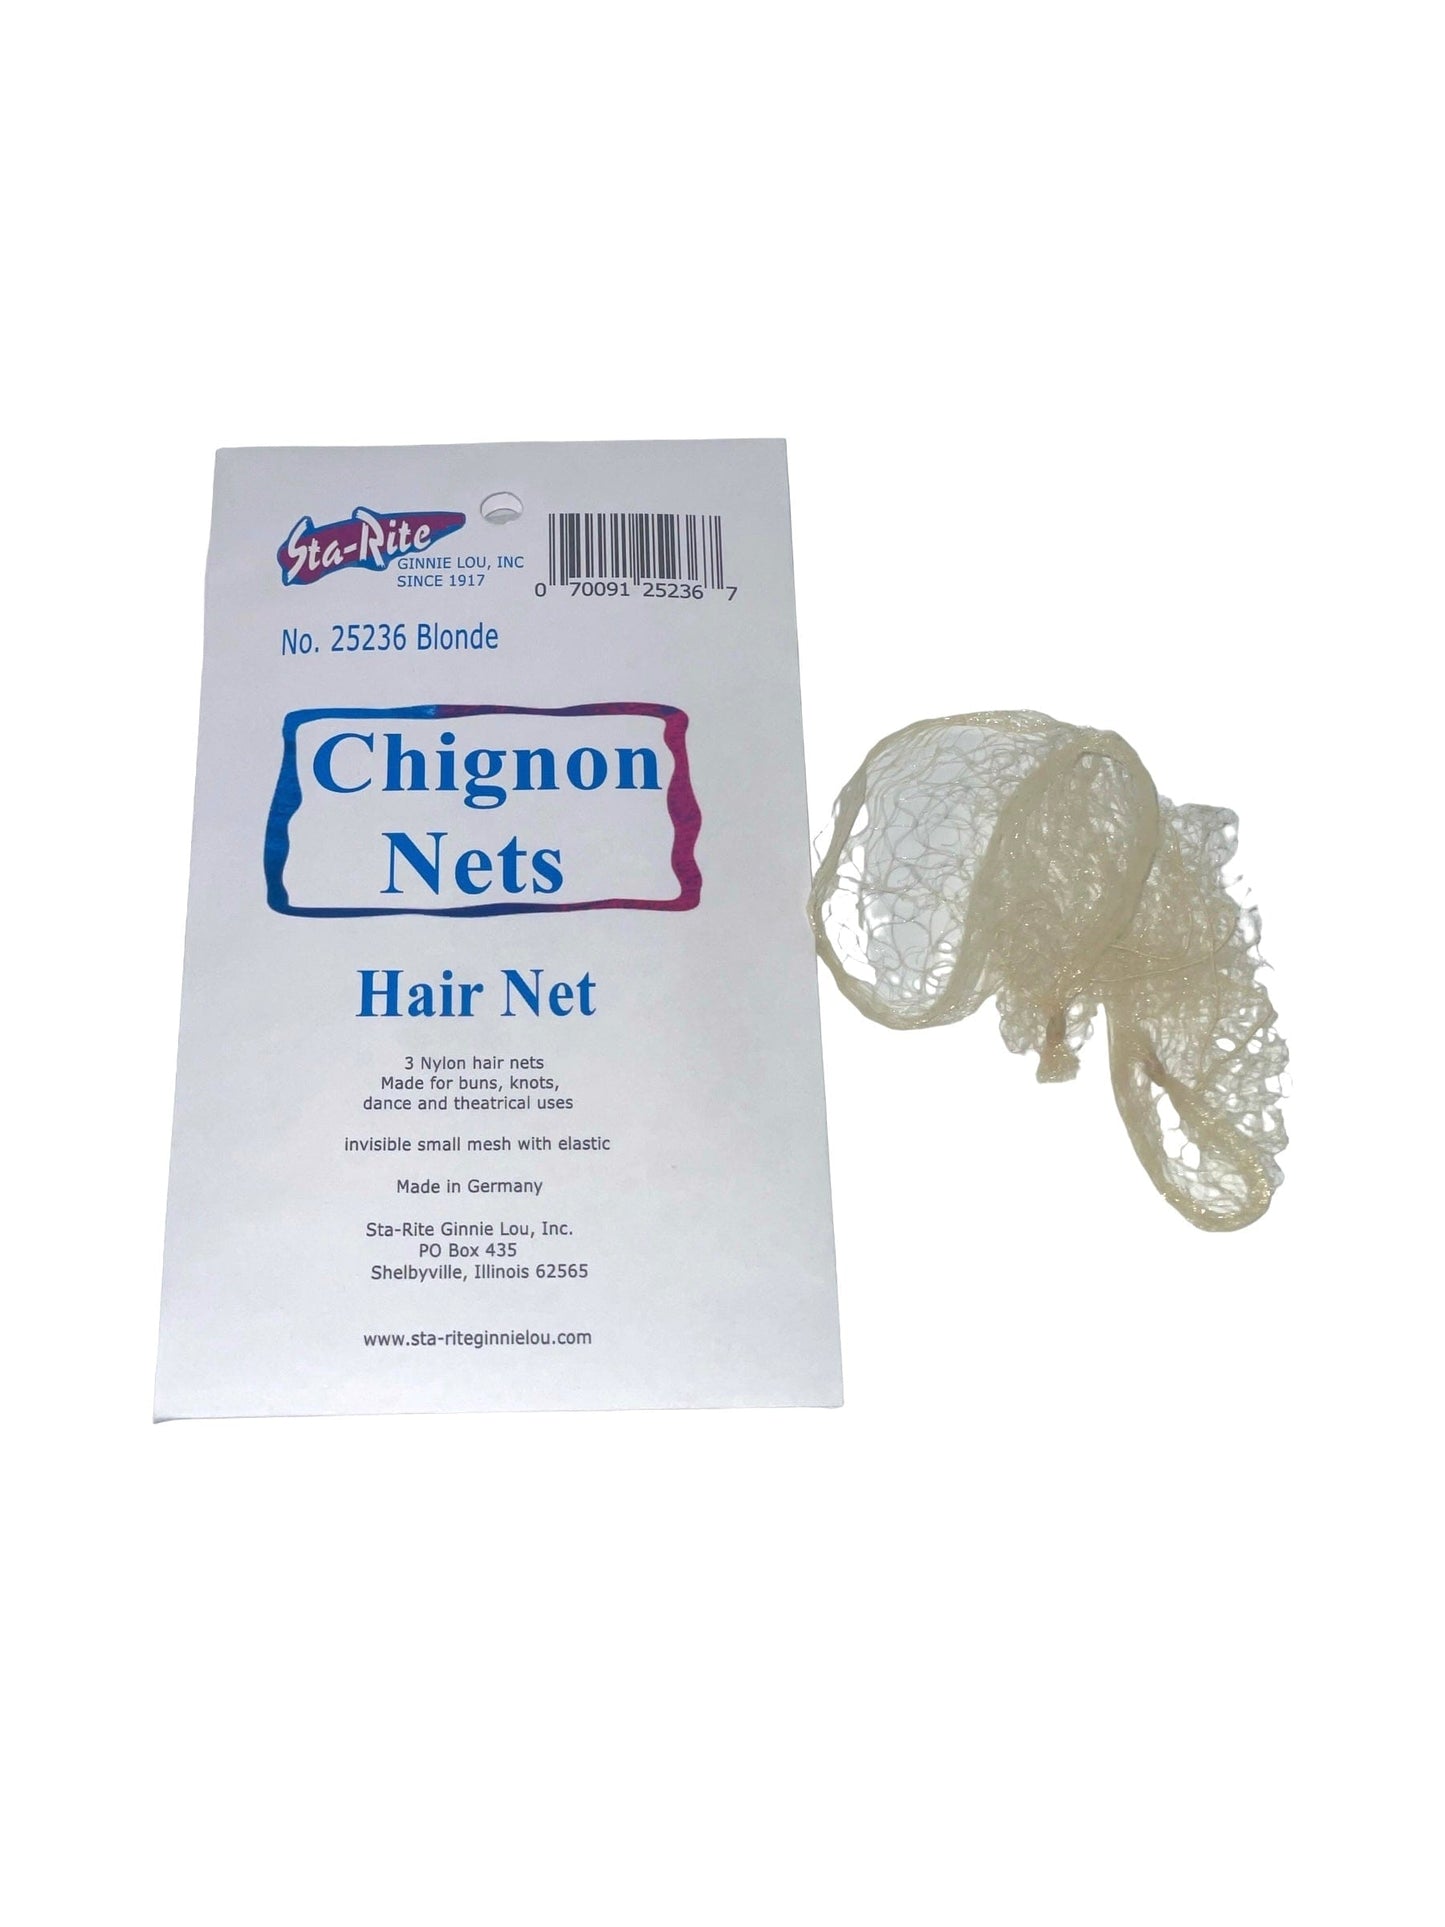 Chignon Hair Nets 3 Nylone Hair Net